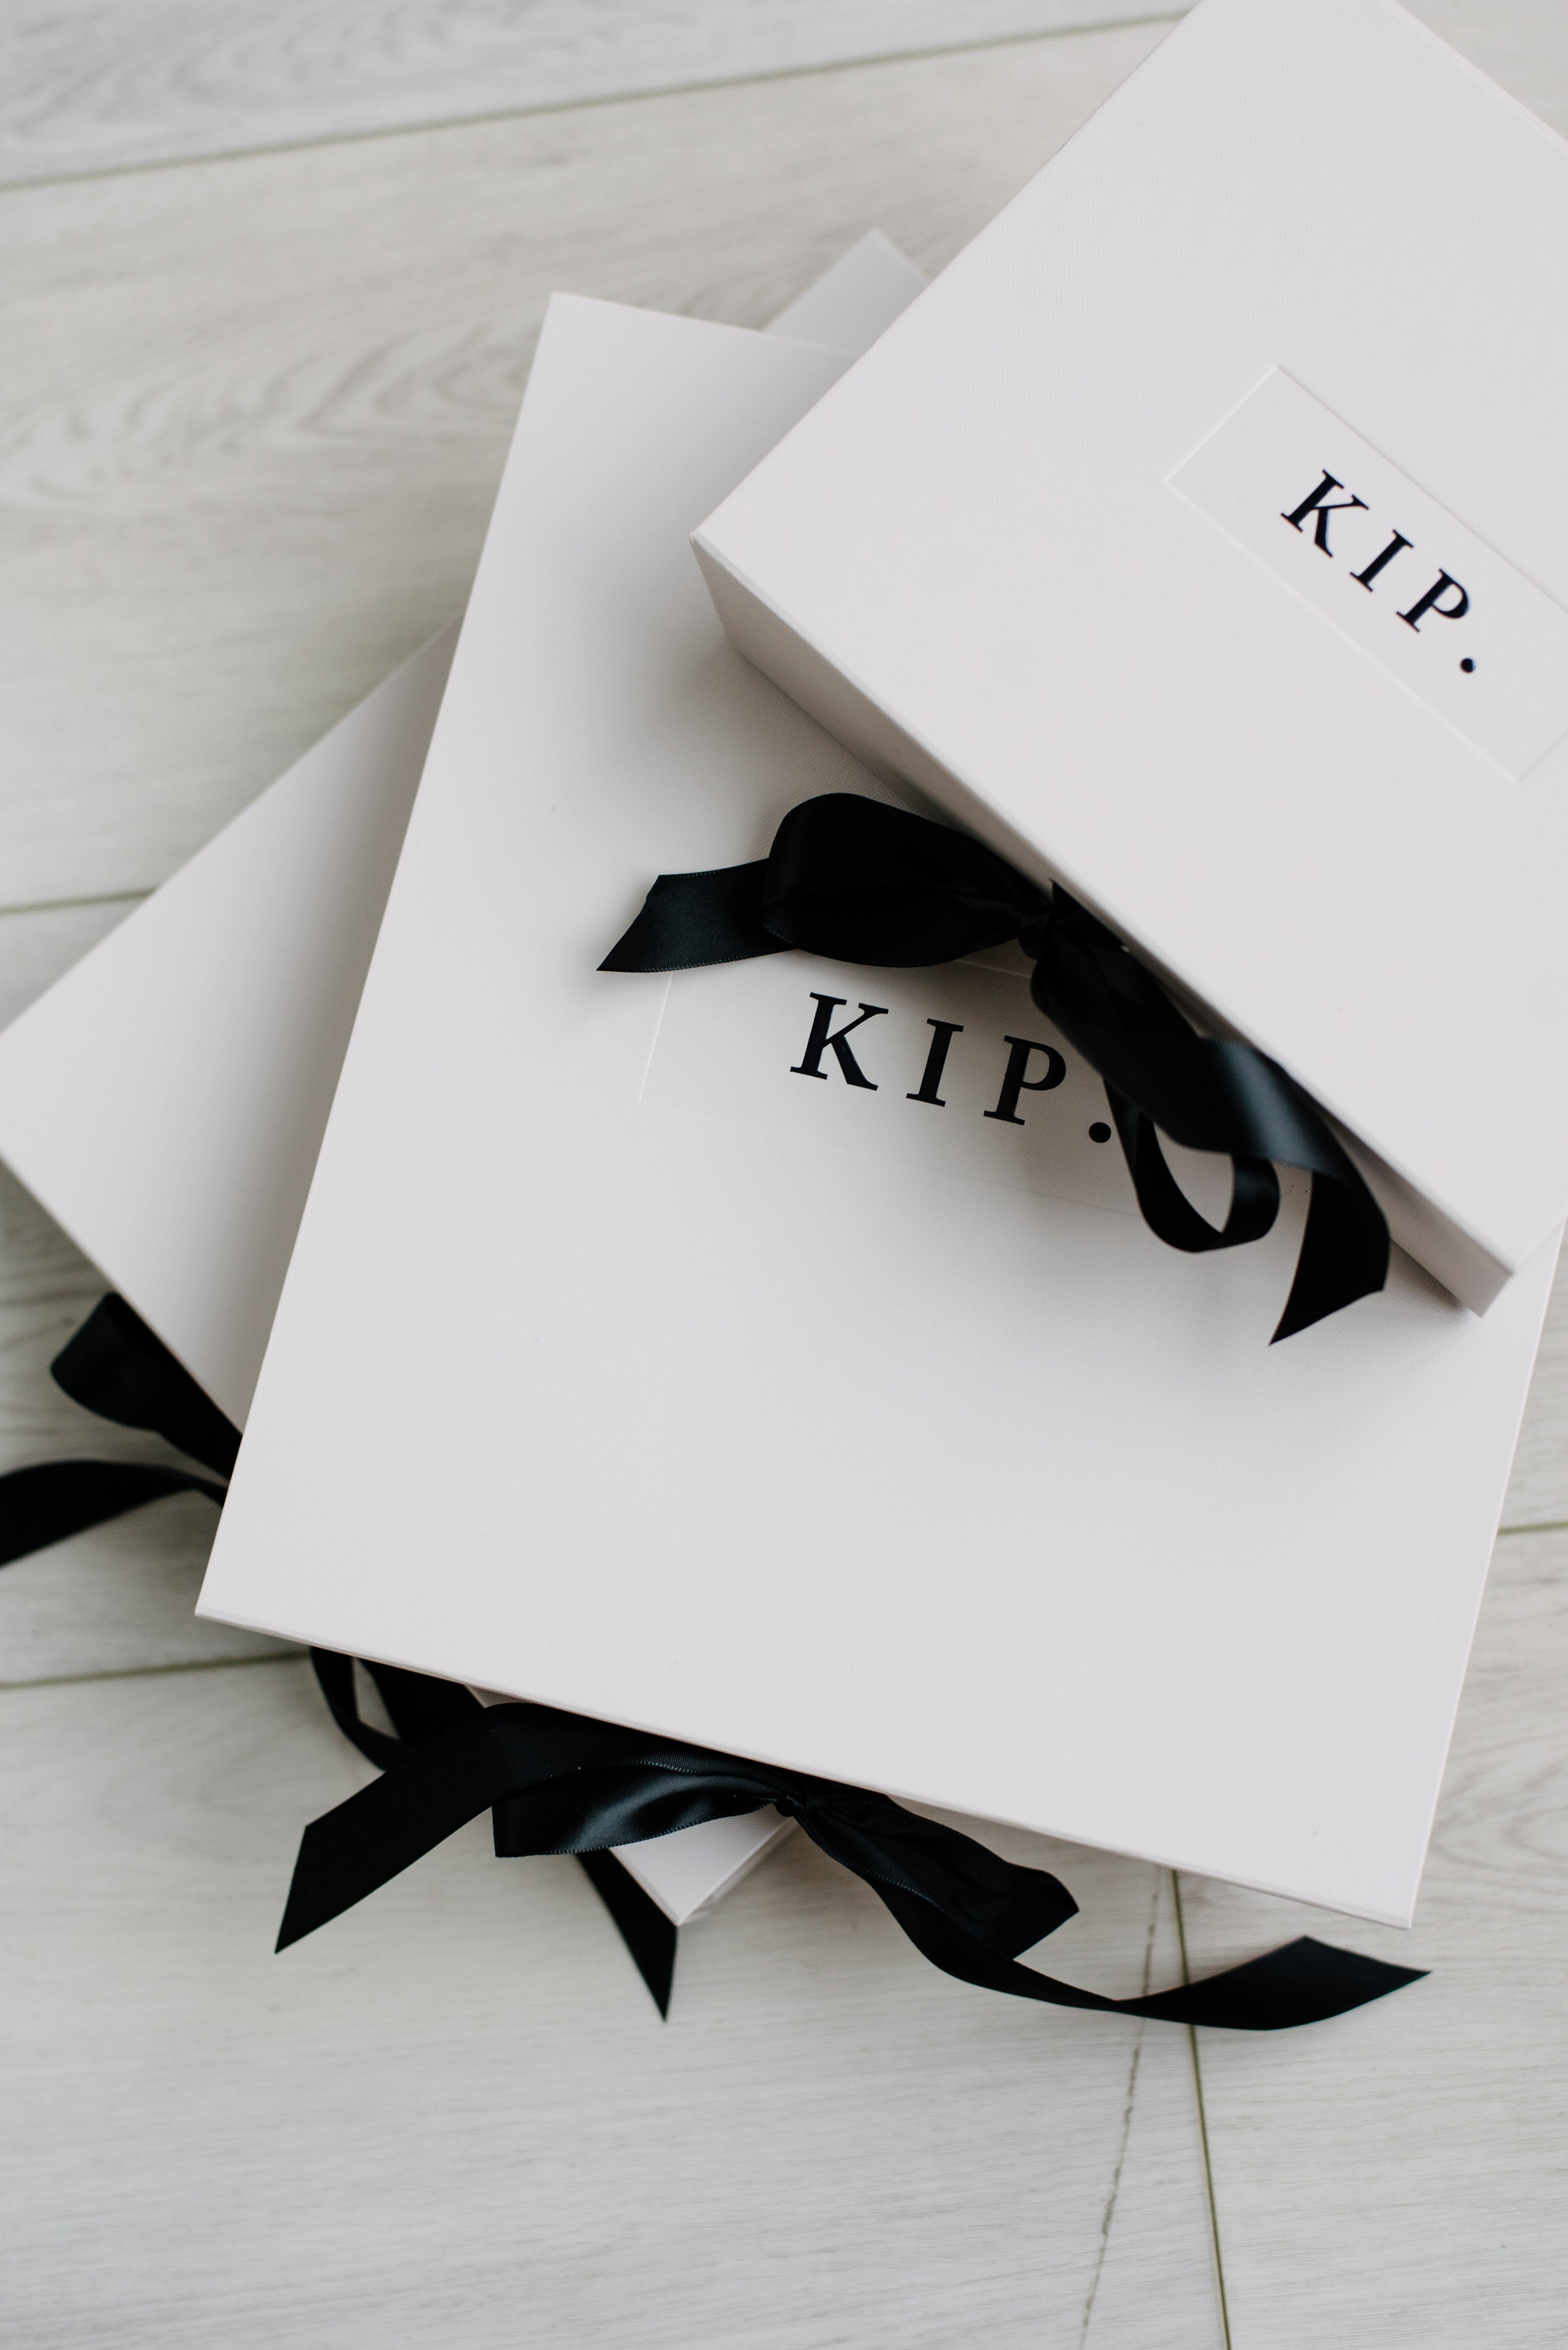 KIP Premium Cotton Short Set in Lily White